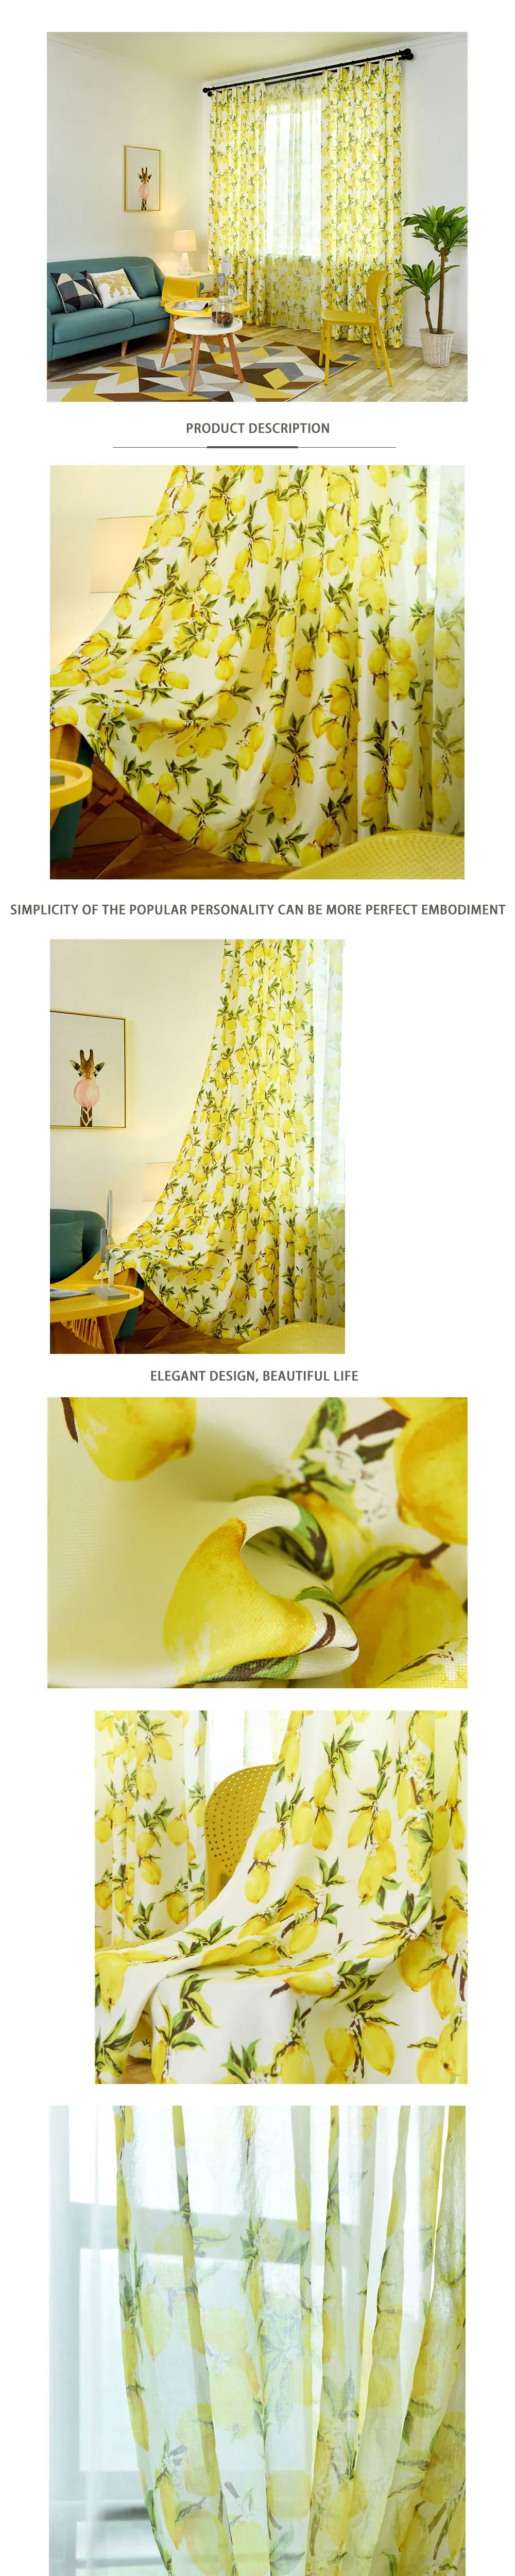 SZ111LOZUJOJU Lemon tree pattern curtains fresh fruit drops for bedroom living room windows simple bright design semi shade fabric (1)